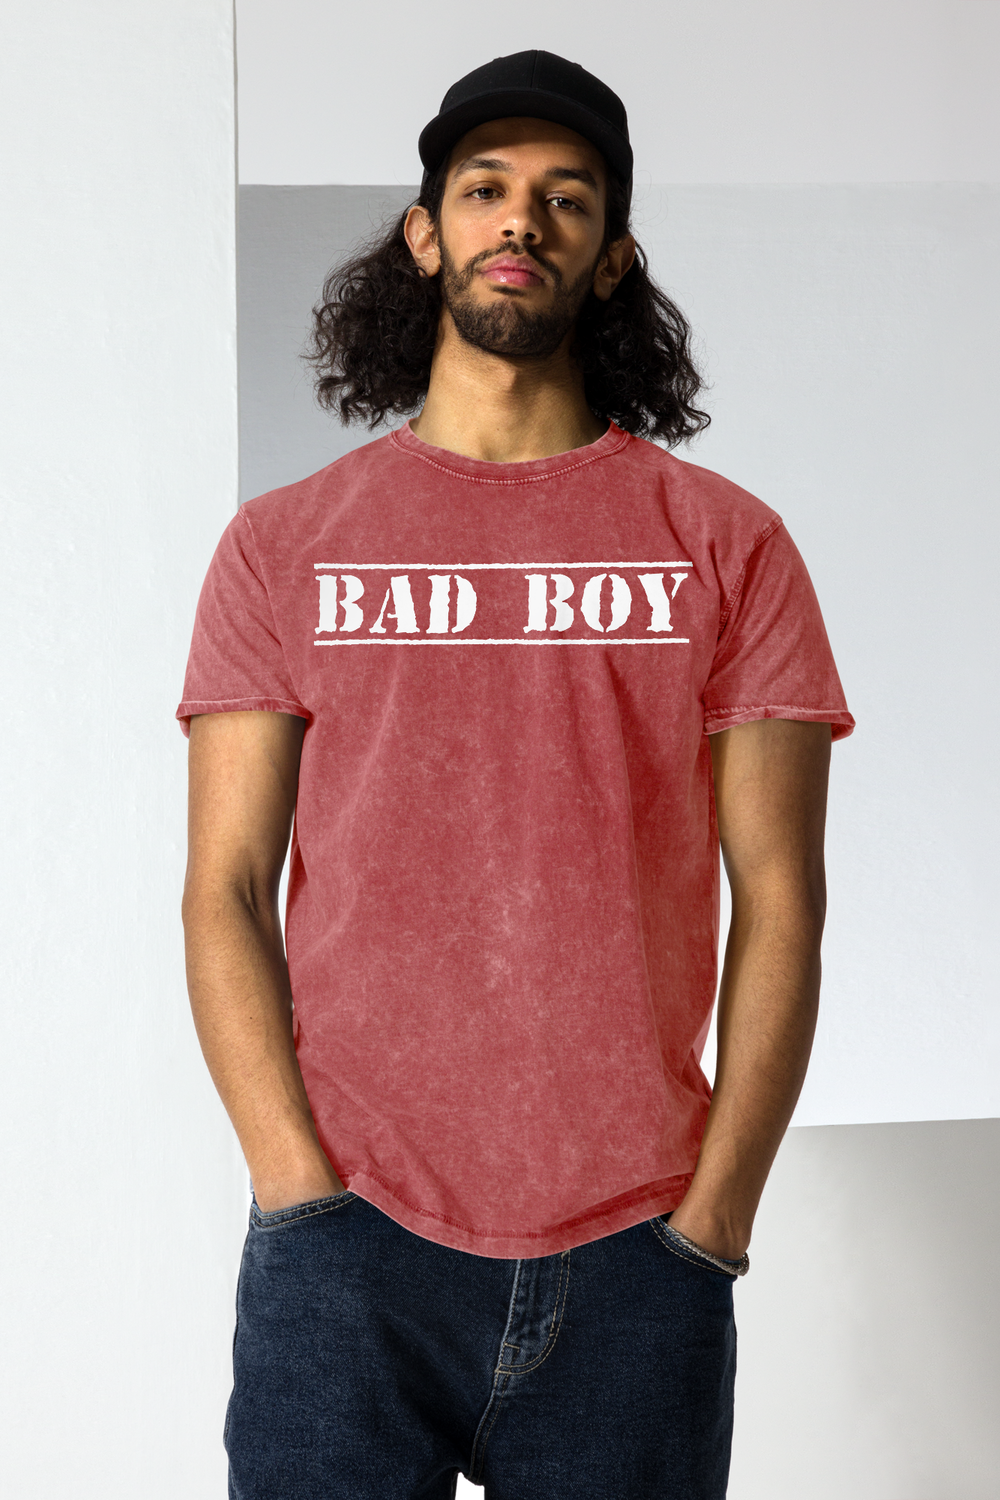 Bad Boy Men's Denim T-Shirt